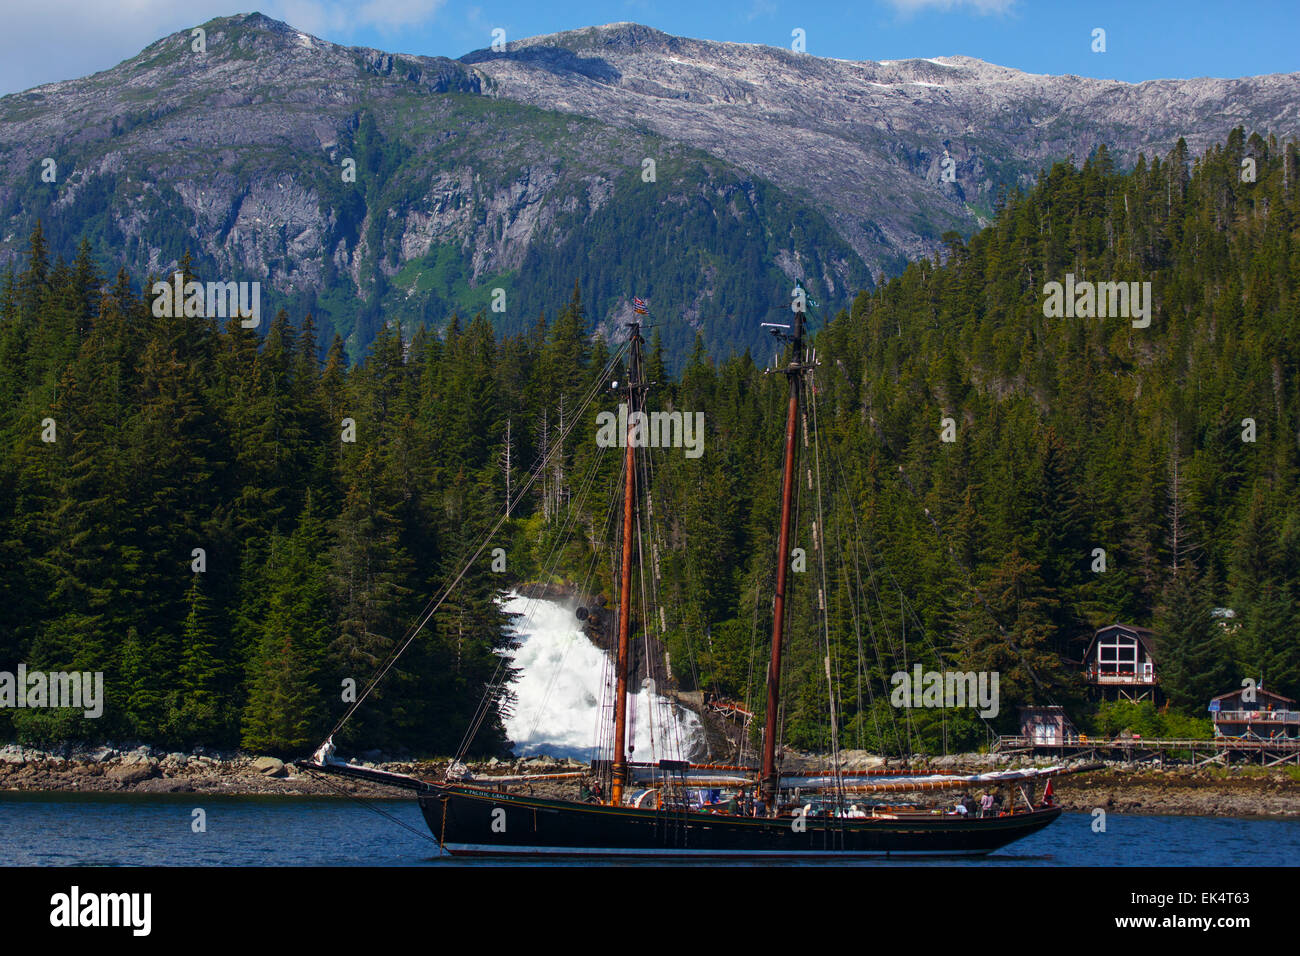 Sailing ship in Warm Springs Bay, Baranof Island, Tongass National Forest, Alaska. Stock Photo